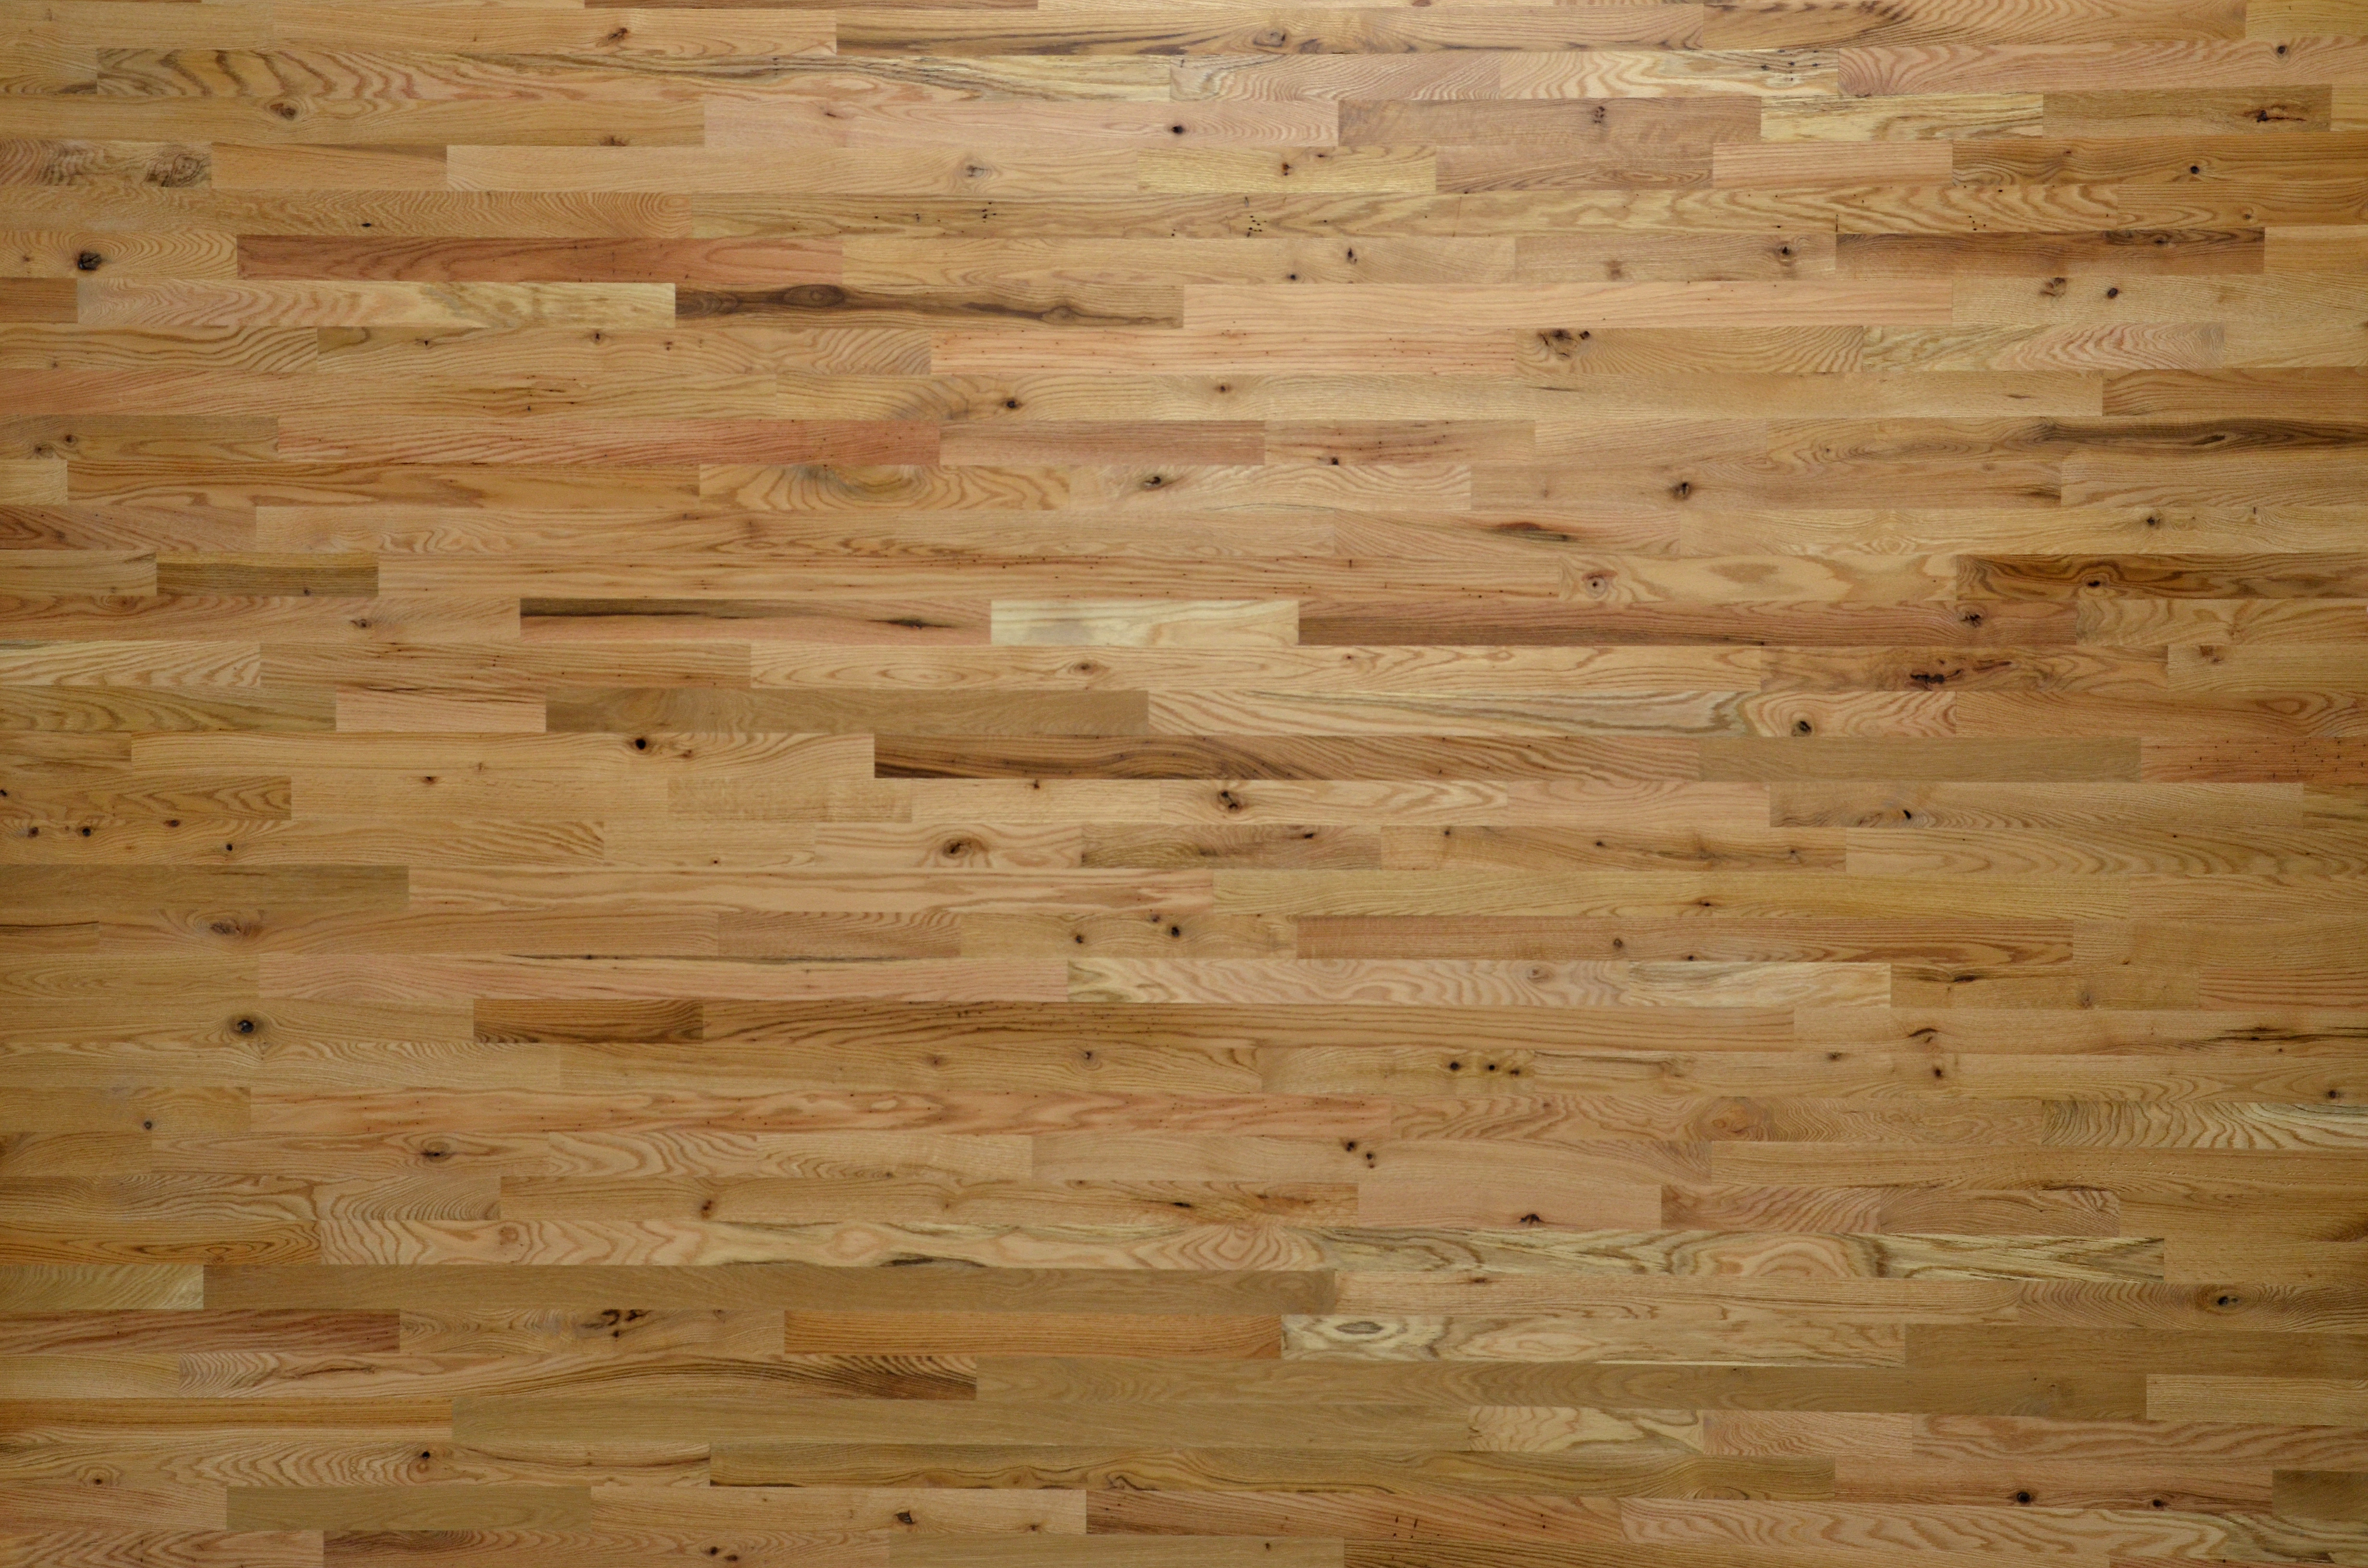 29 Elegant Discount Hardwood Flooring Illinois 2022 free download discount hardwood flooring illinois of lacrosse hardwood flooring walnut white oak red oak hickory regarding 2 common red oak